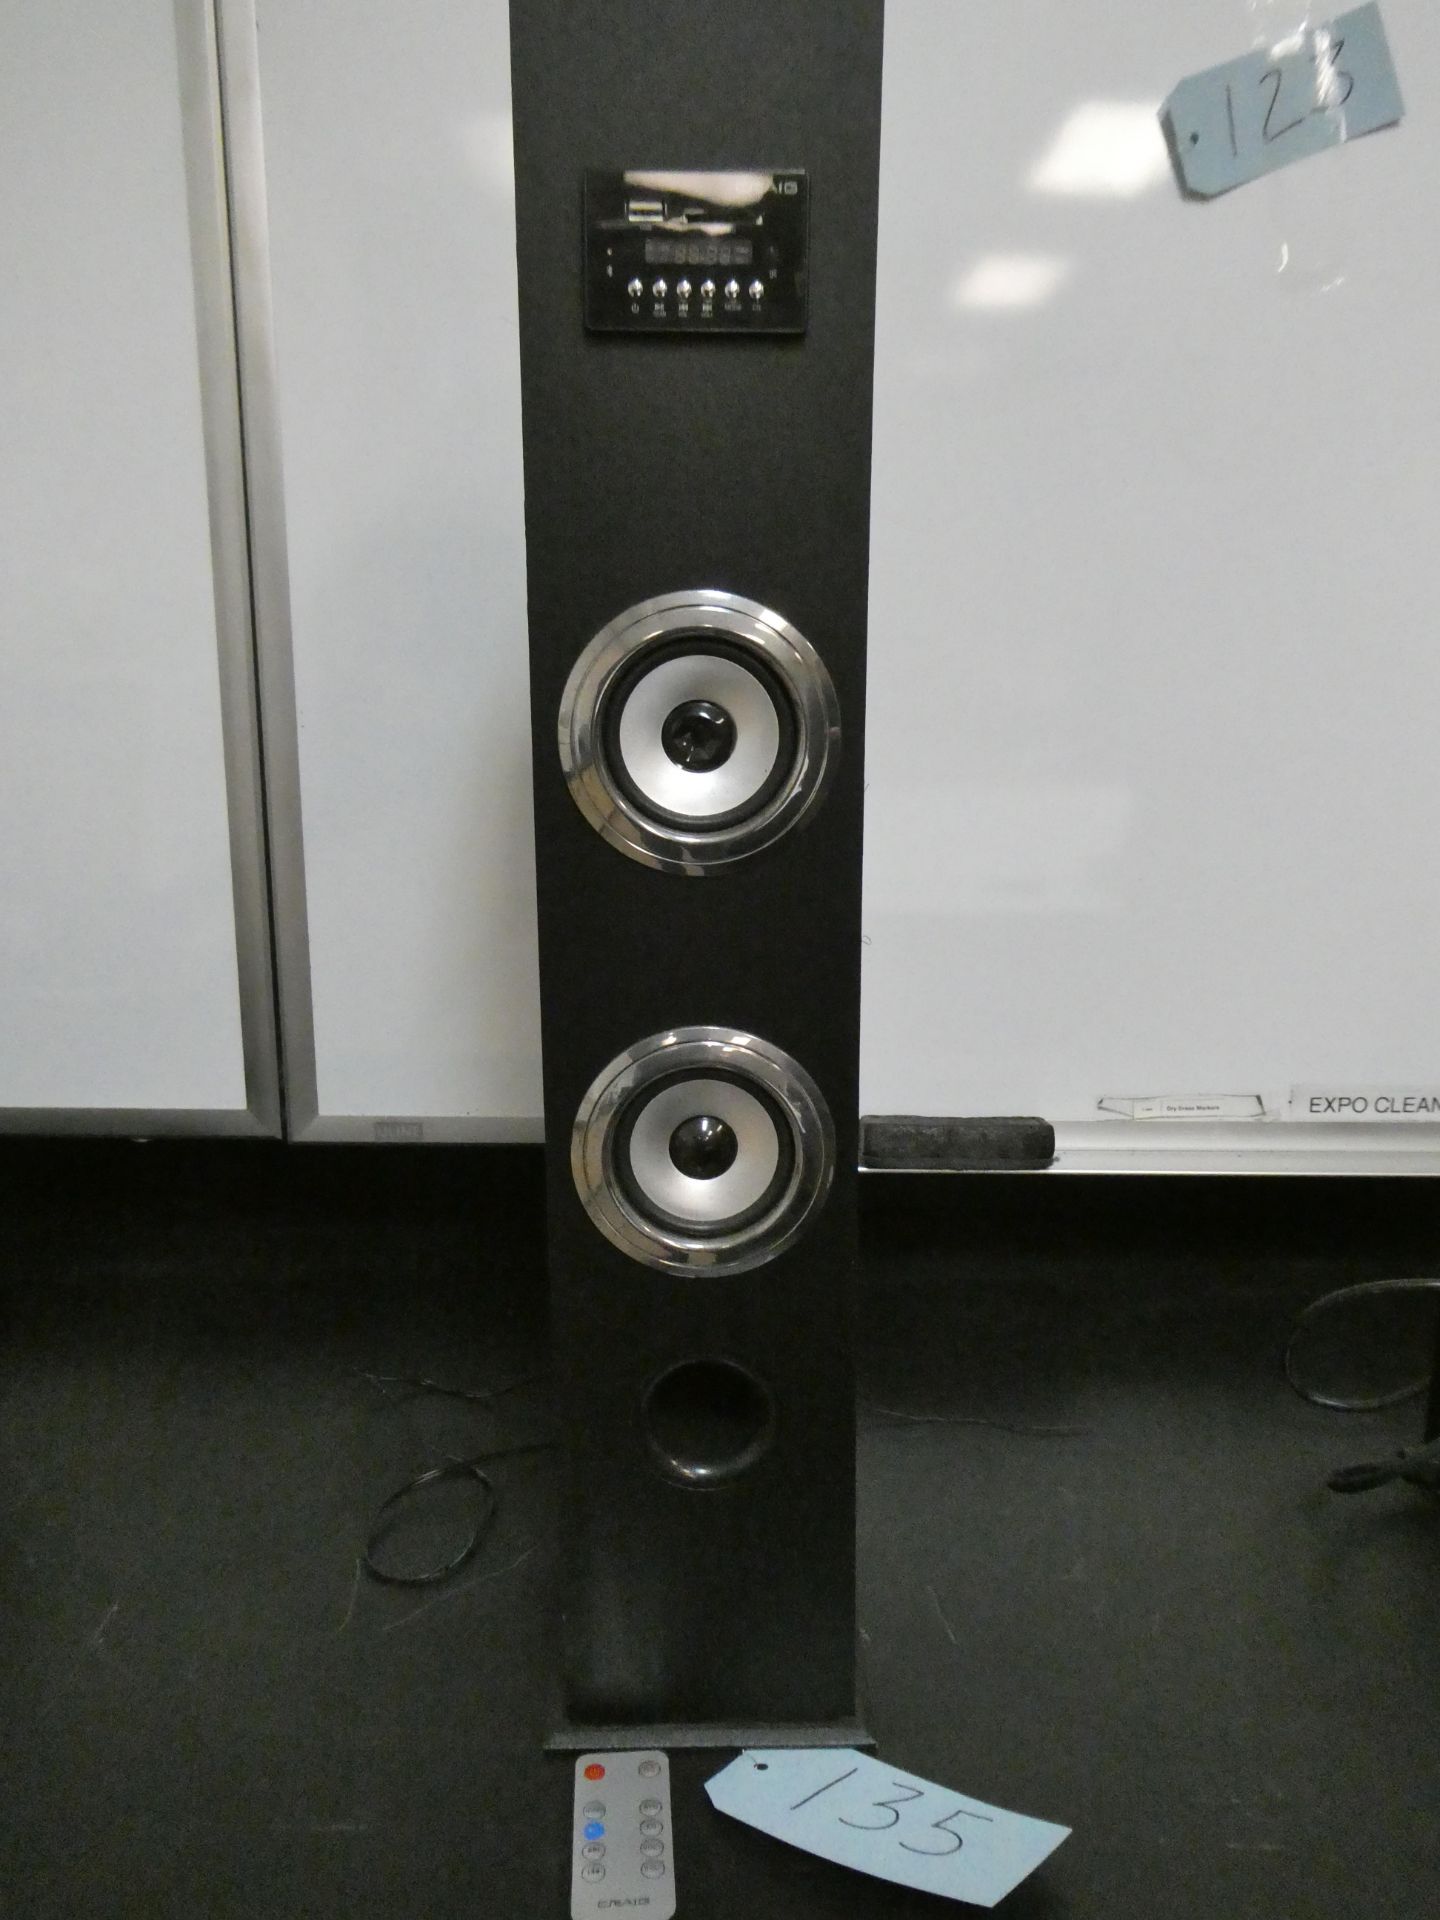 Craig 2.1 channel tower speaker system w/ bluetooth